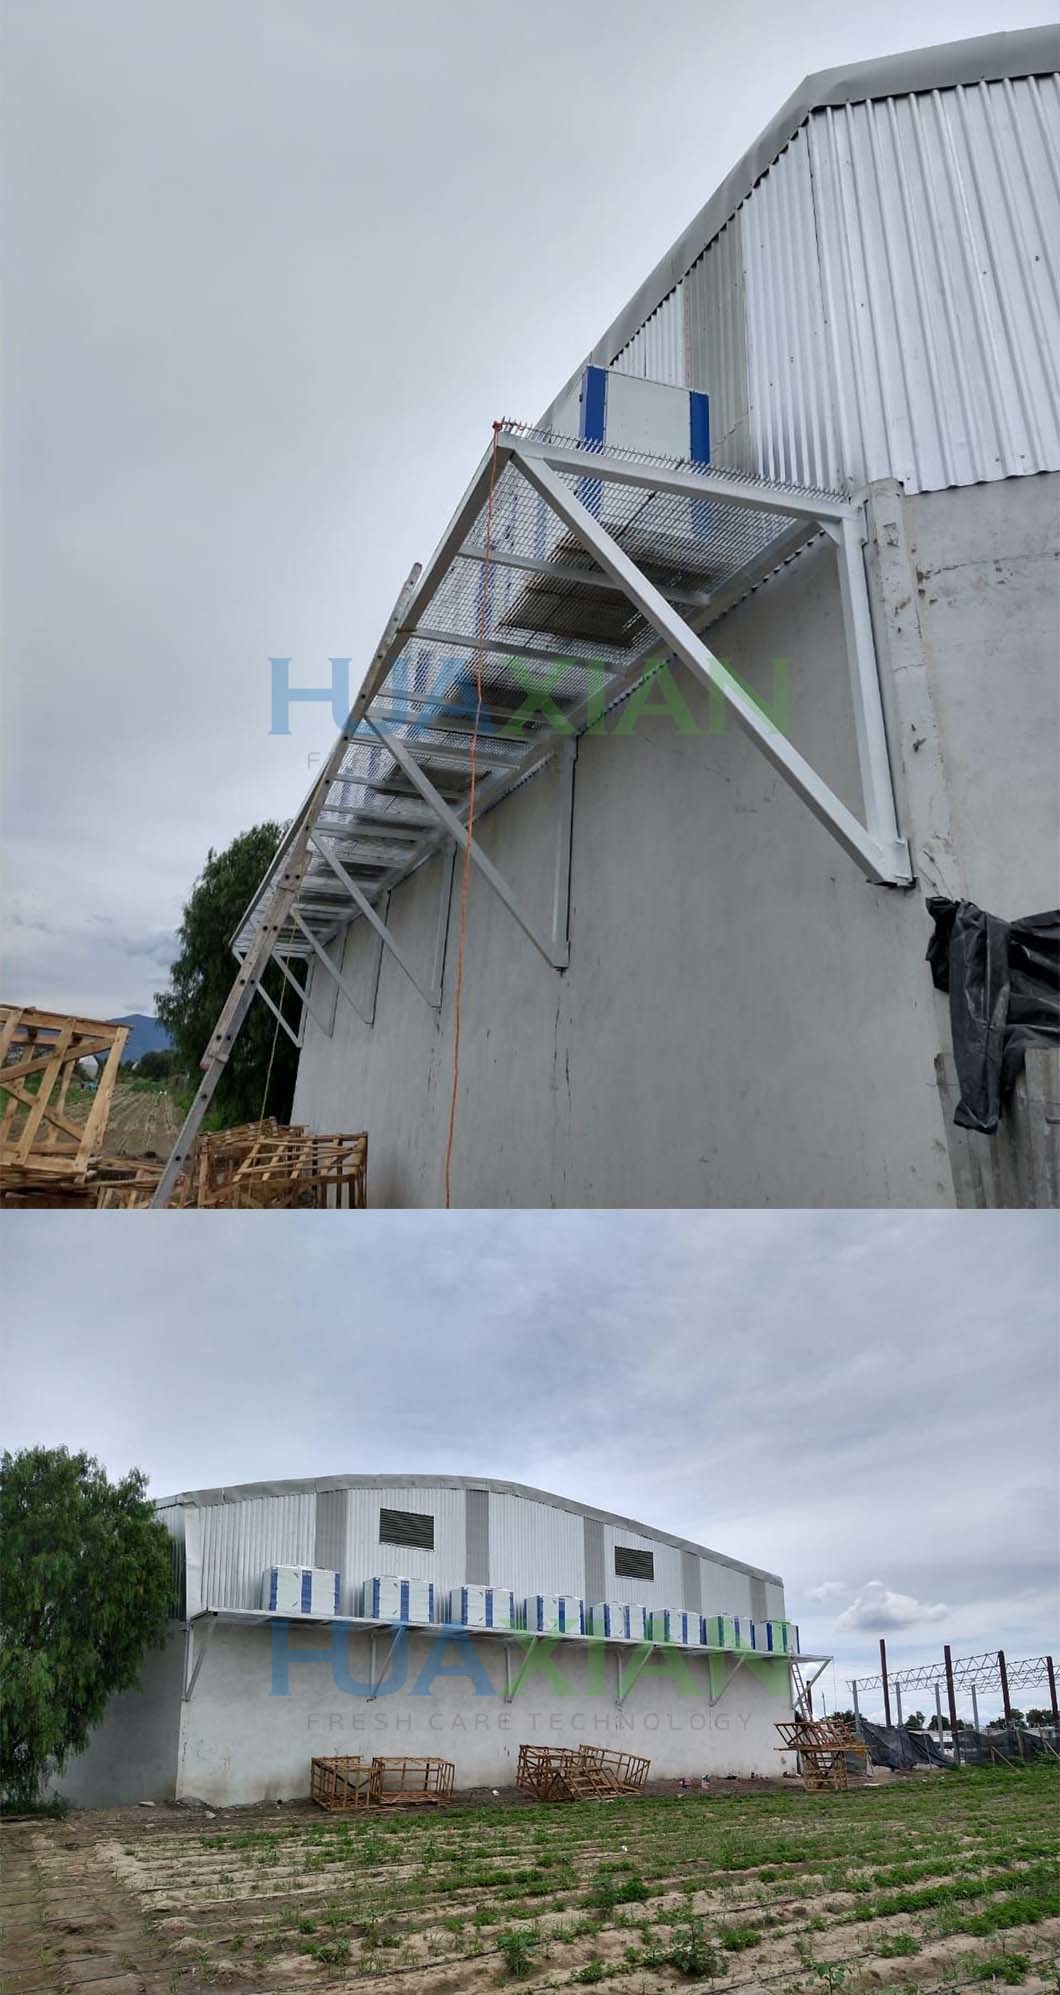 2~50HP Split Refrigeration Bitzer Compressor Air Cooling Cold Room Outdoor Condenser Unit with Panels